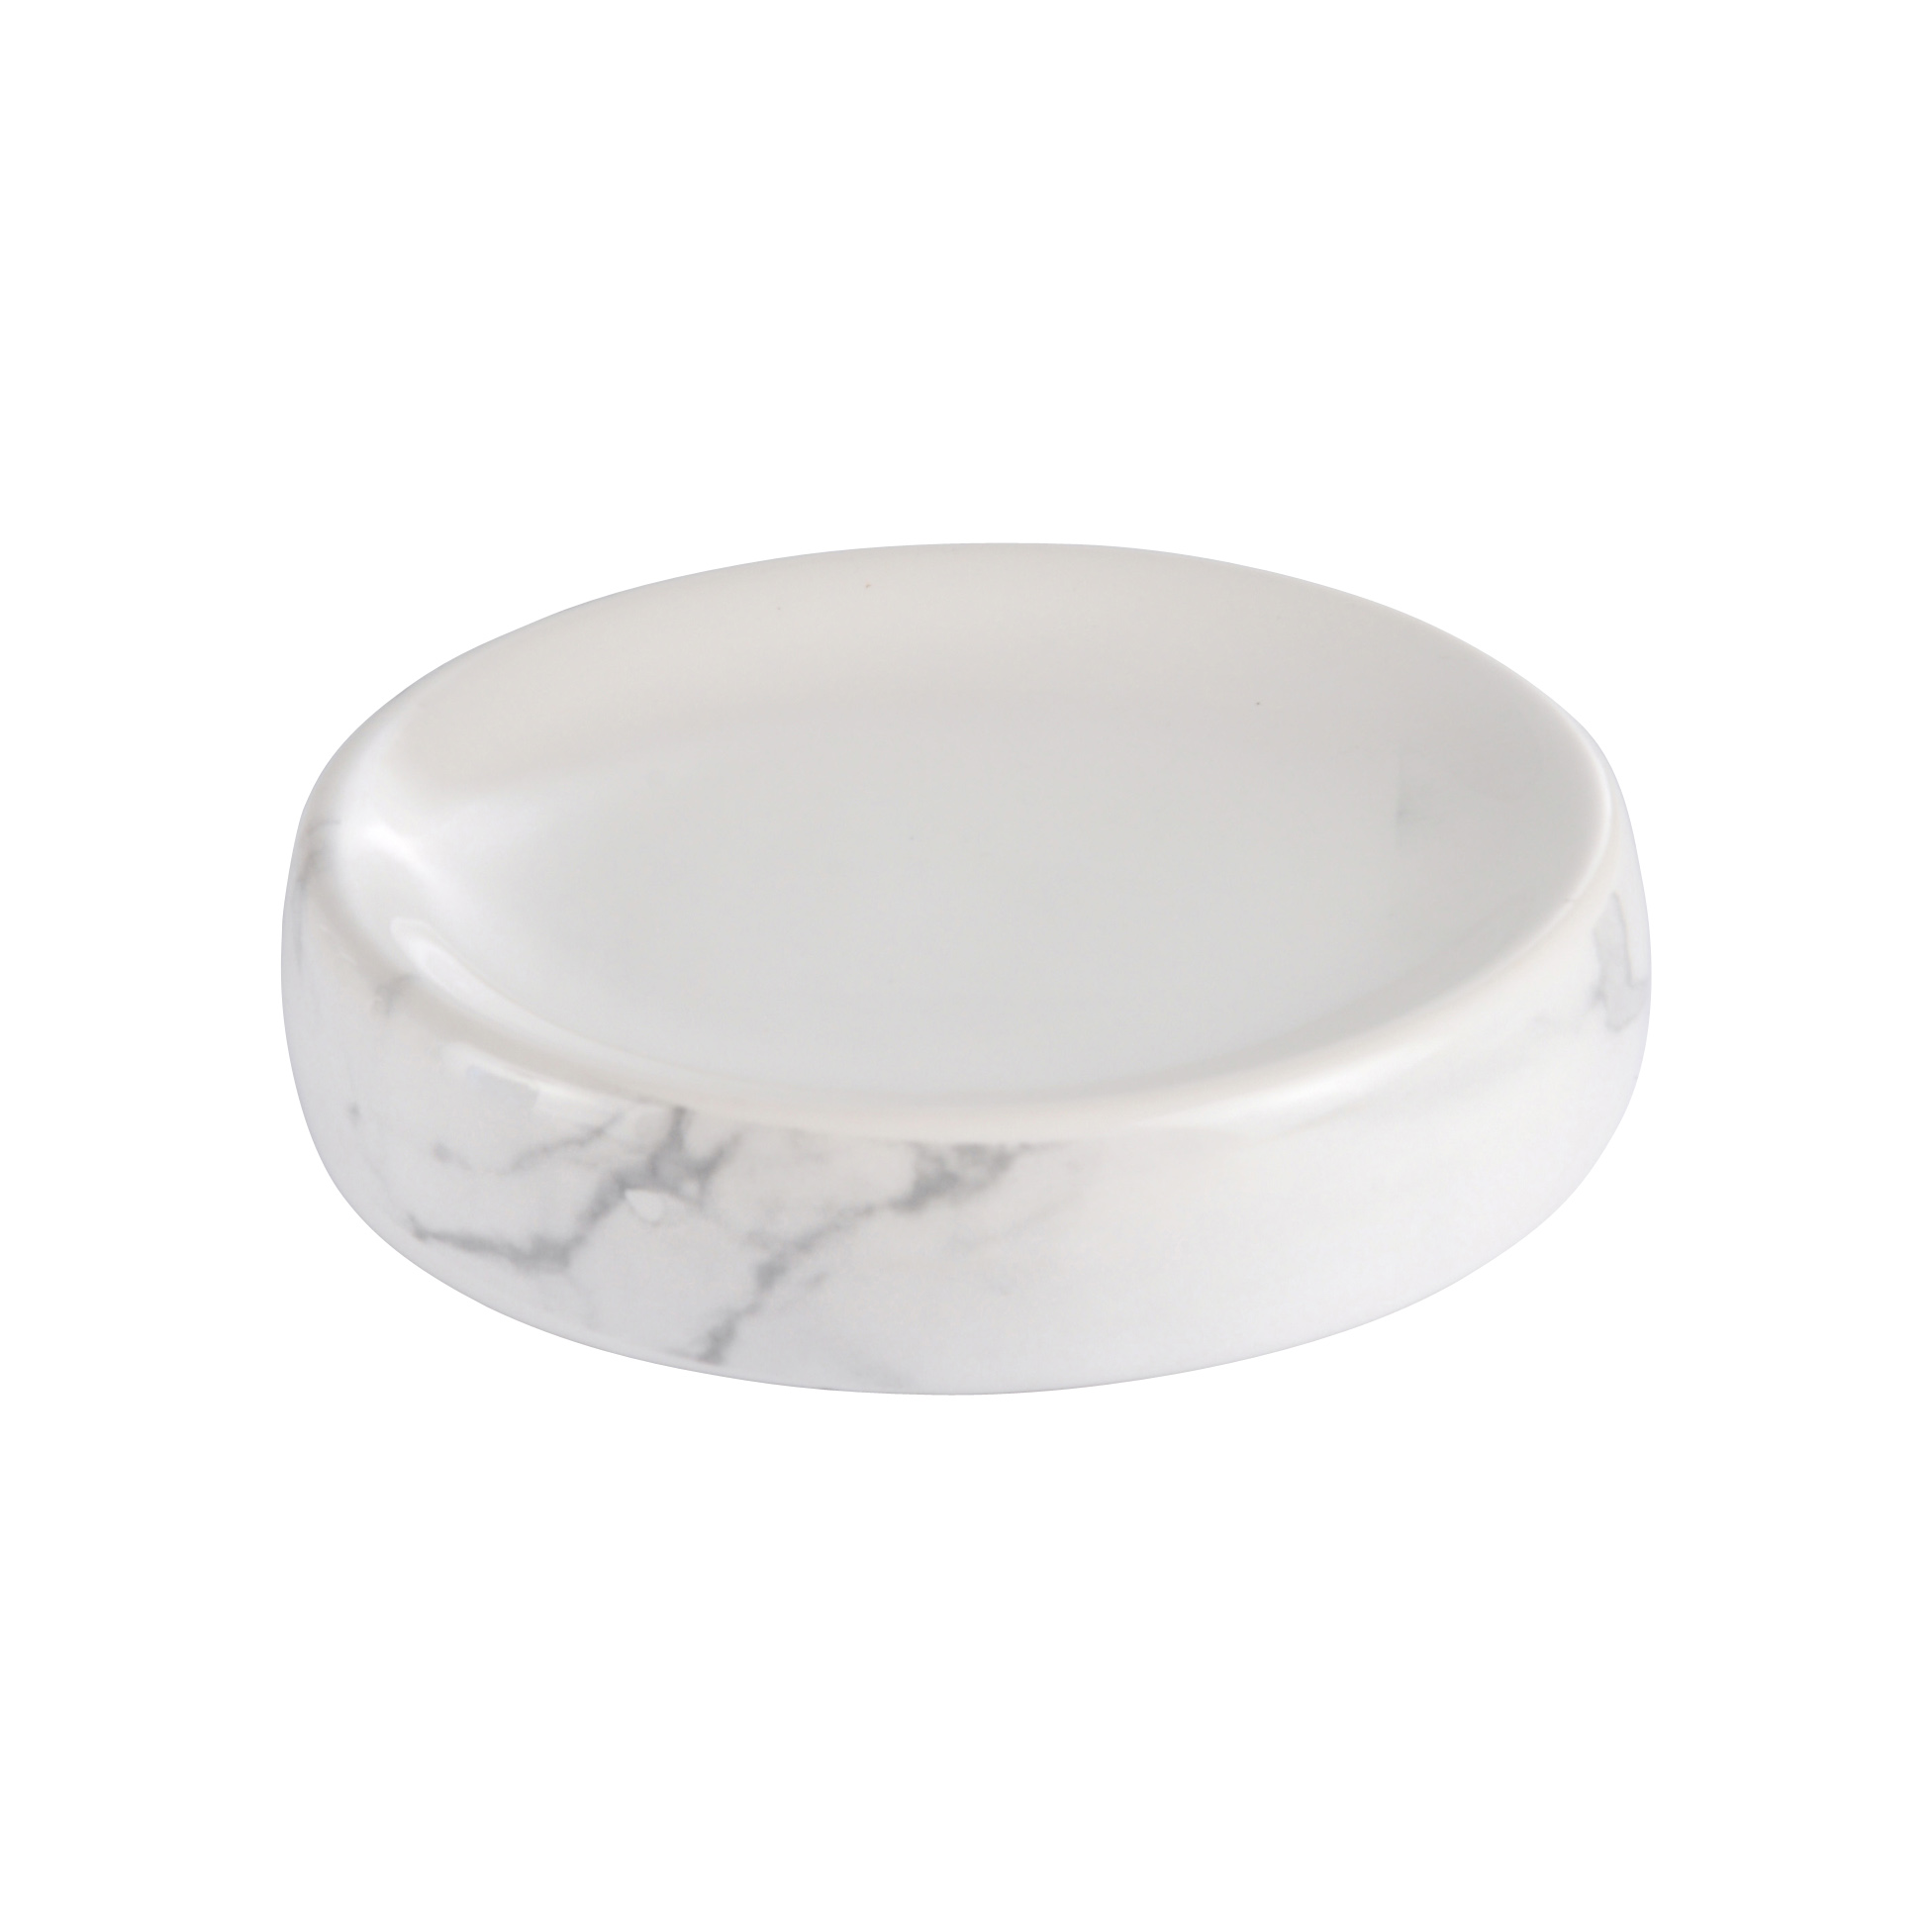 Porte savon en ceramique 11 x 2.5 cm Marbre